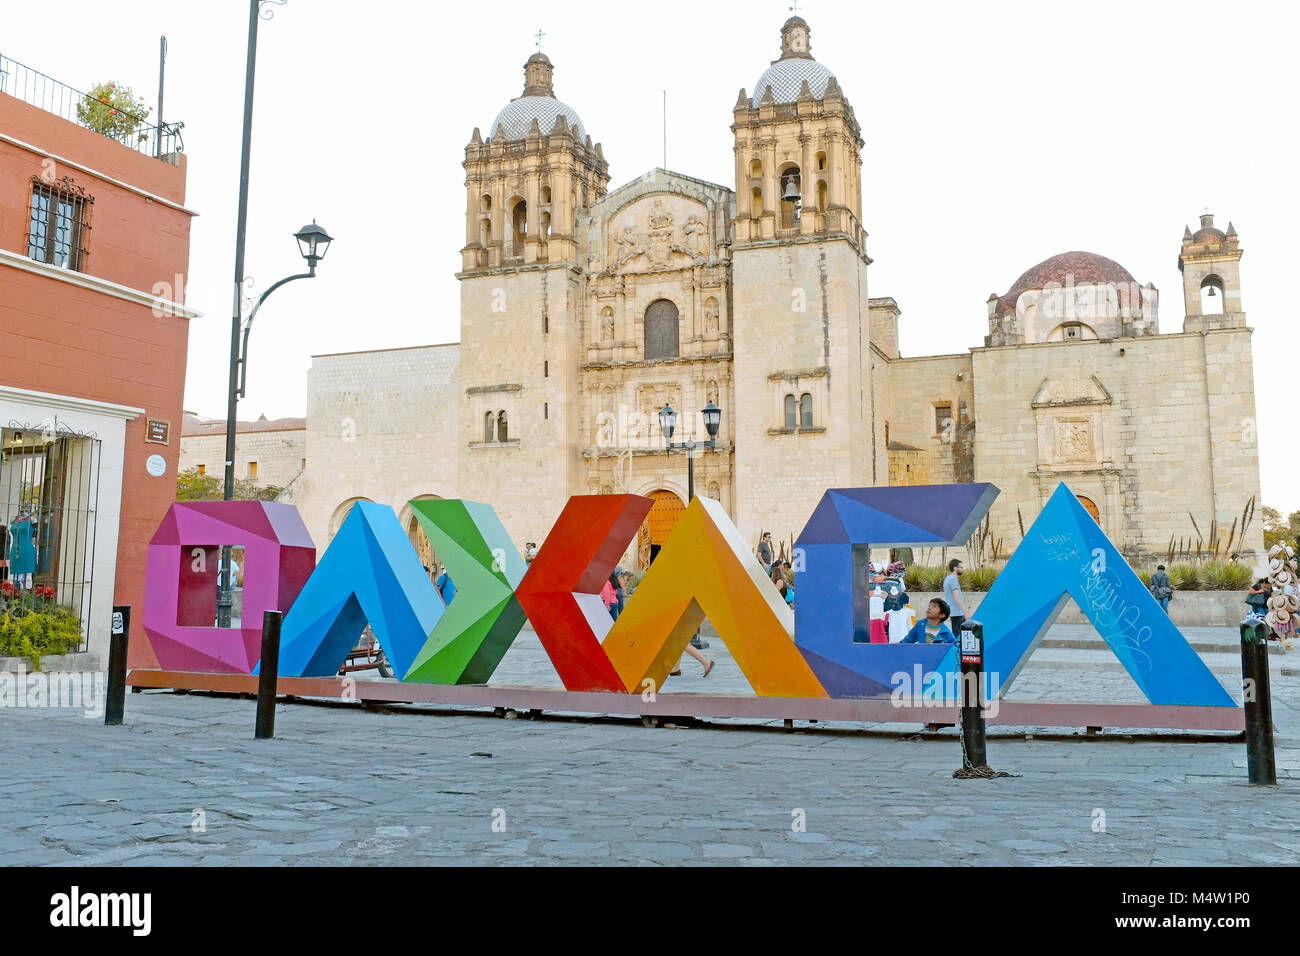 Colorful Oaxaca letters contrast with the iconic landmark Templo de Santo Domingo de Guzman in Oaxaca, Mexico. Stock Photo